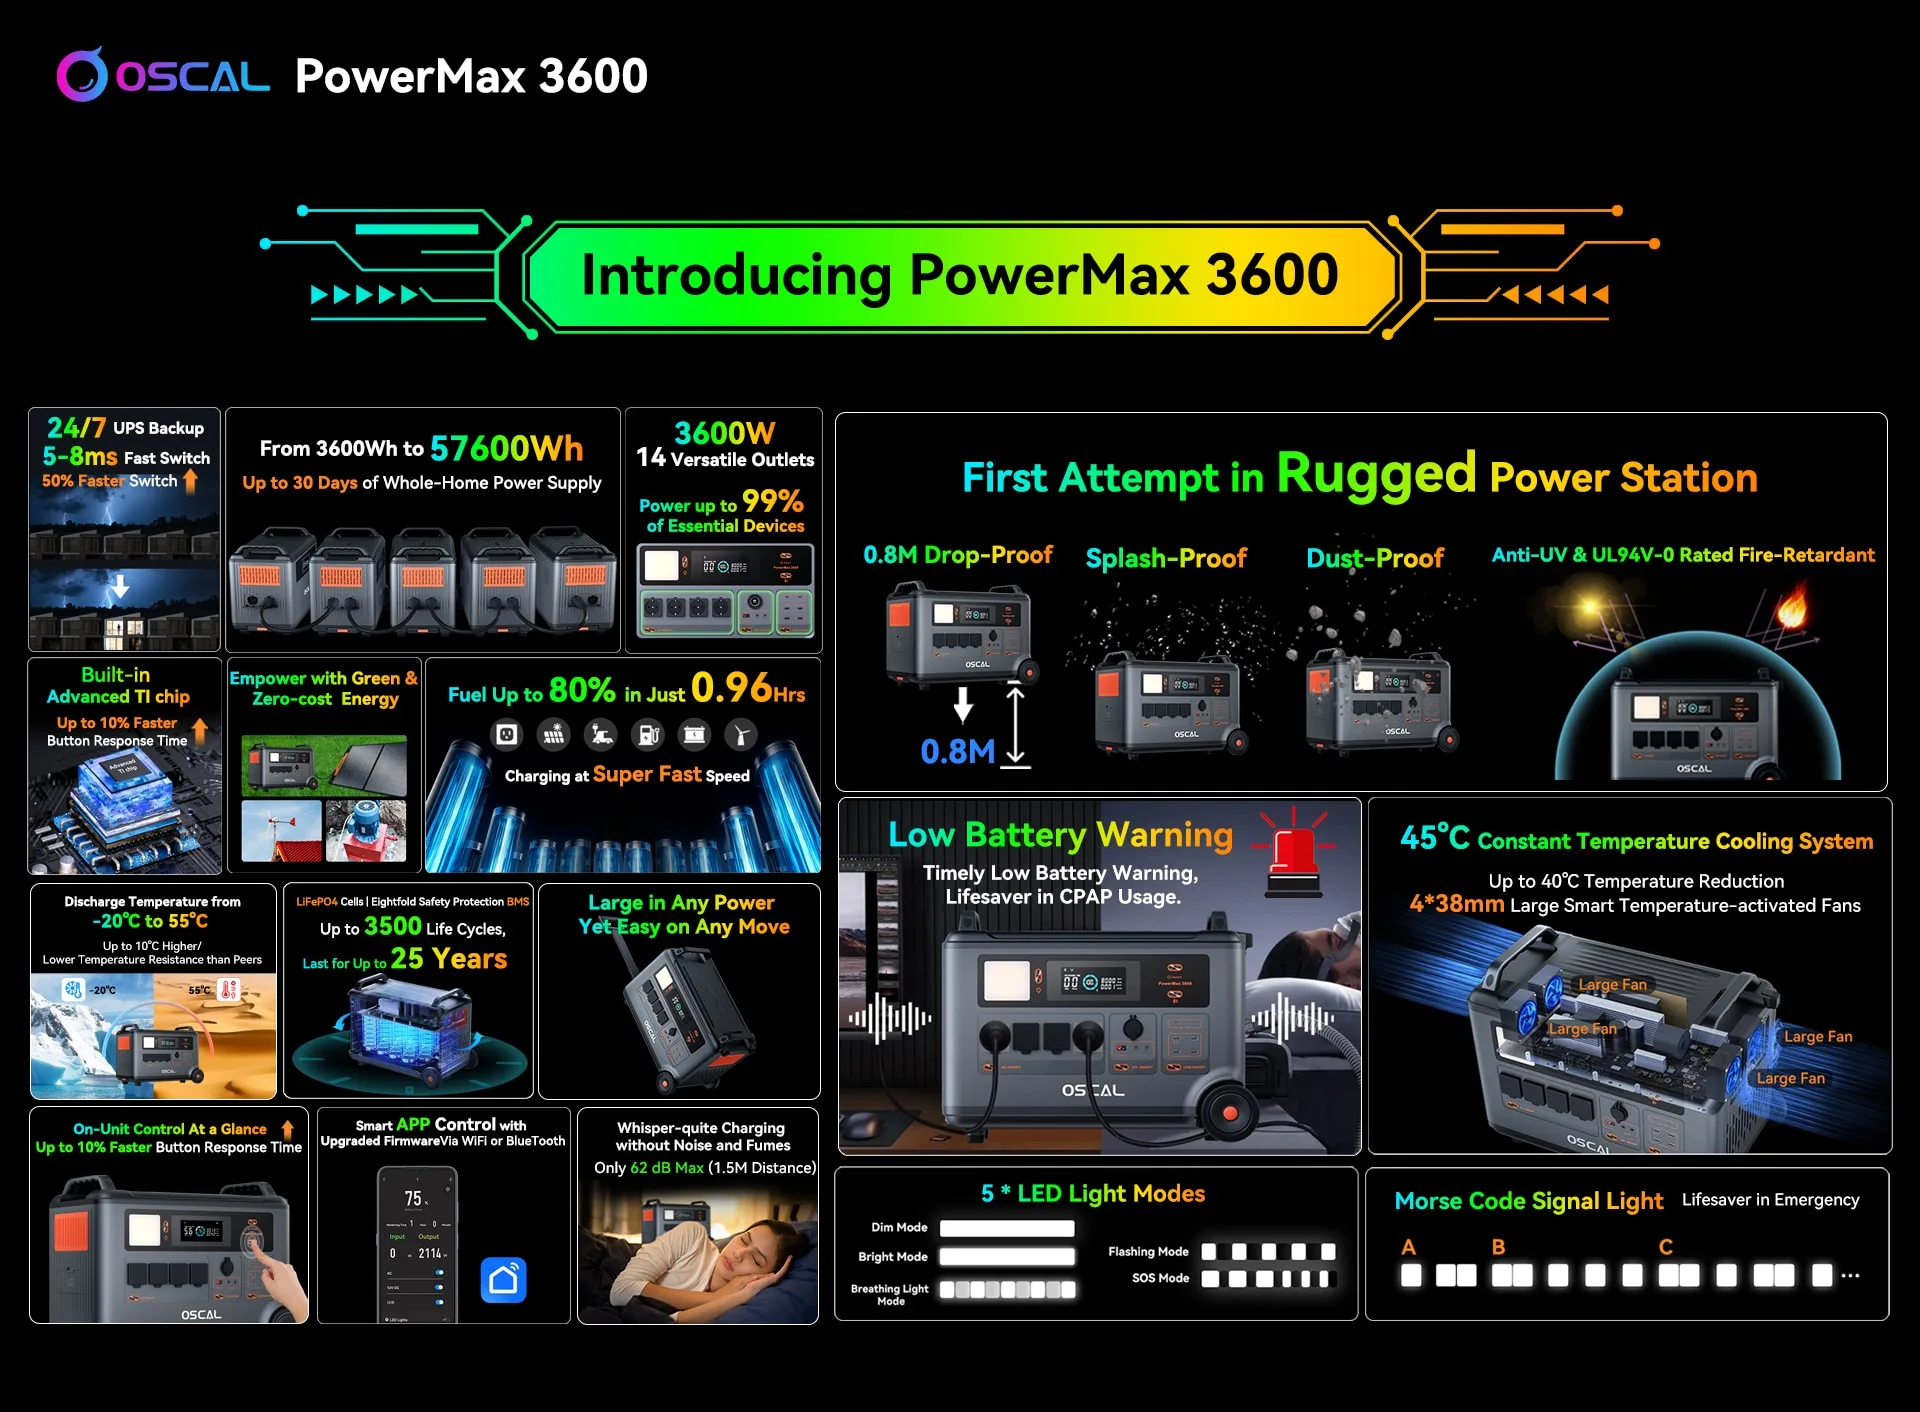 OSCAL PowerMax 3600